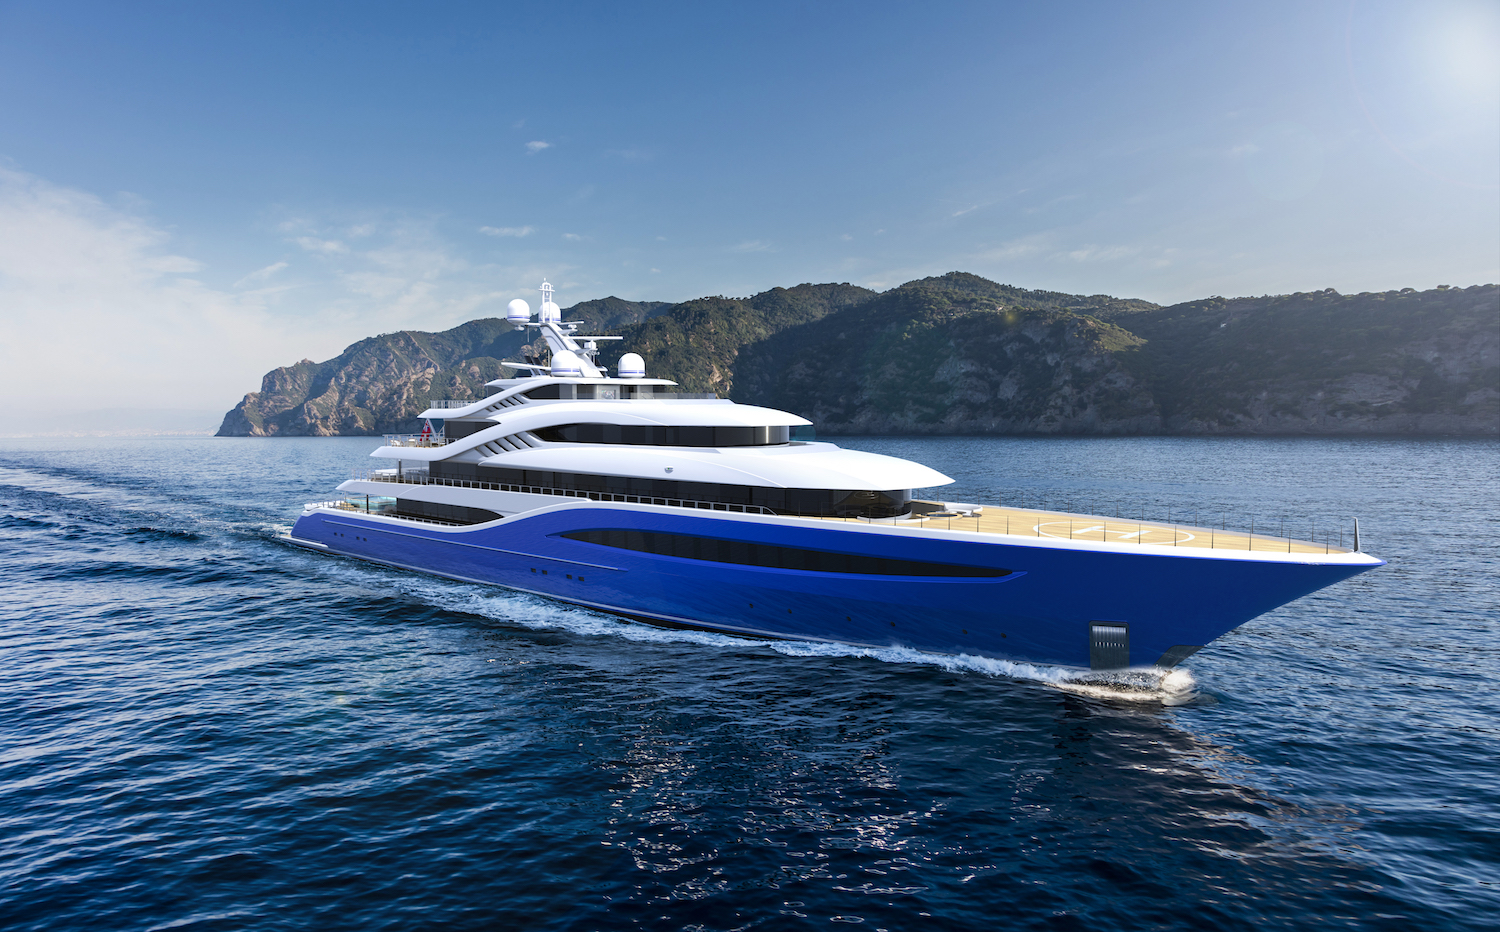 Turquoise Yachts 87m mega yacht Project Vento